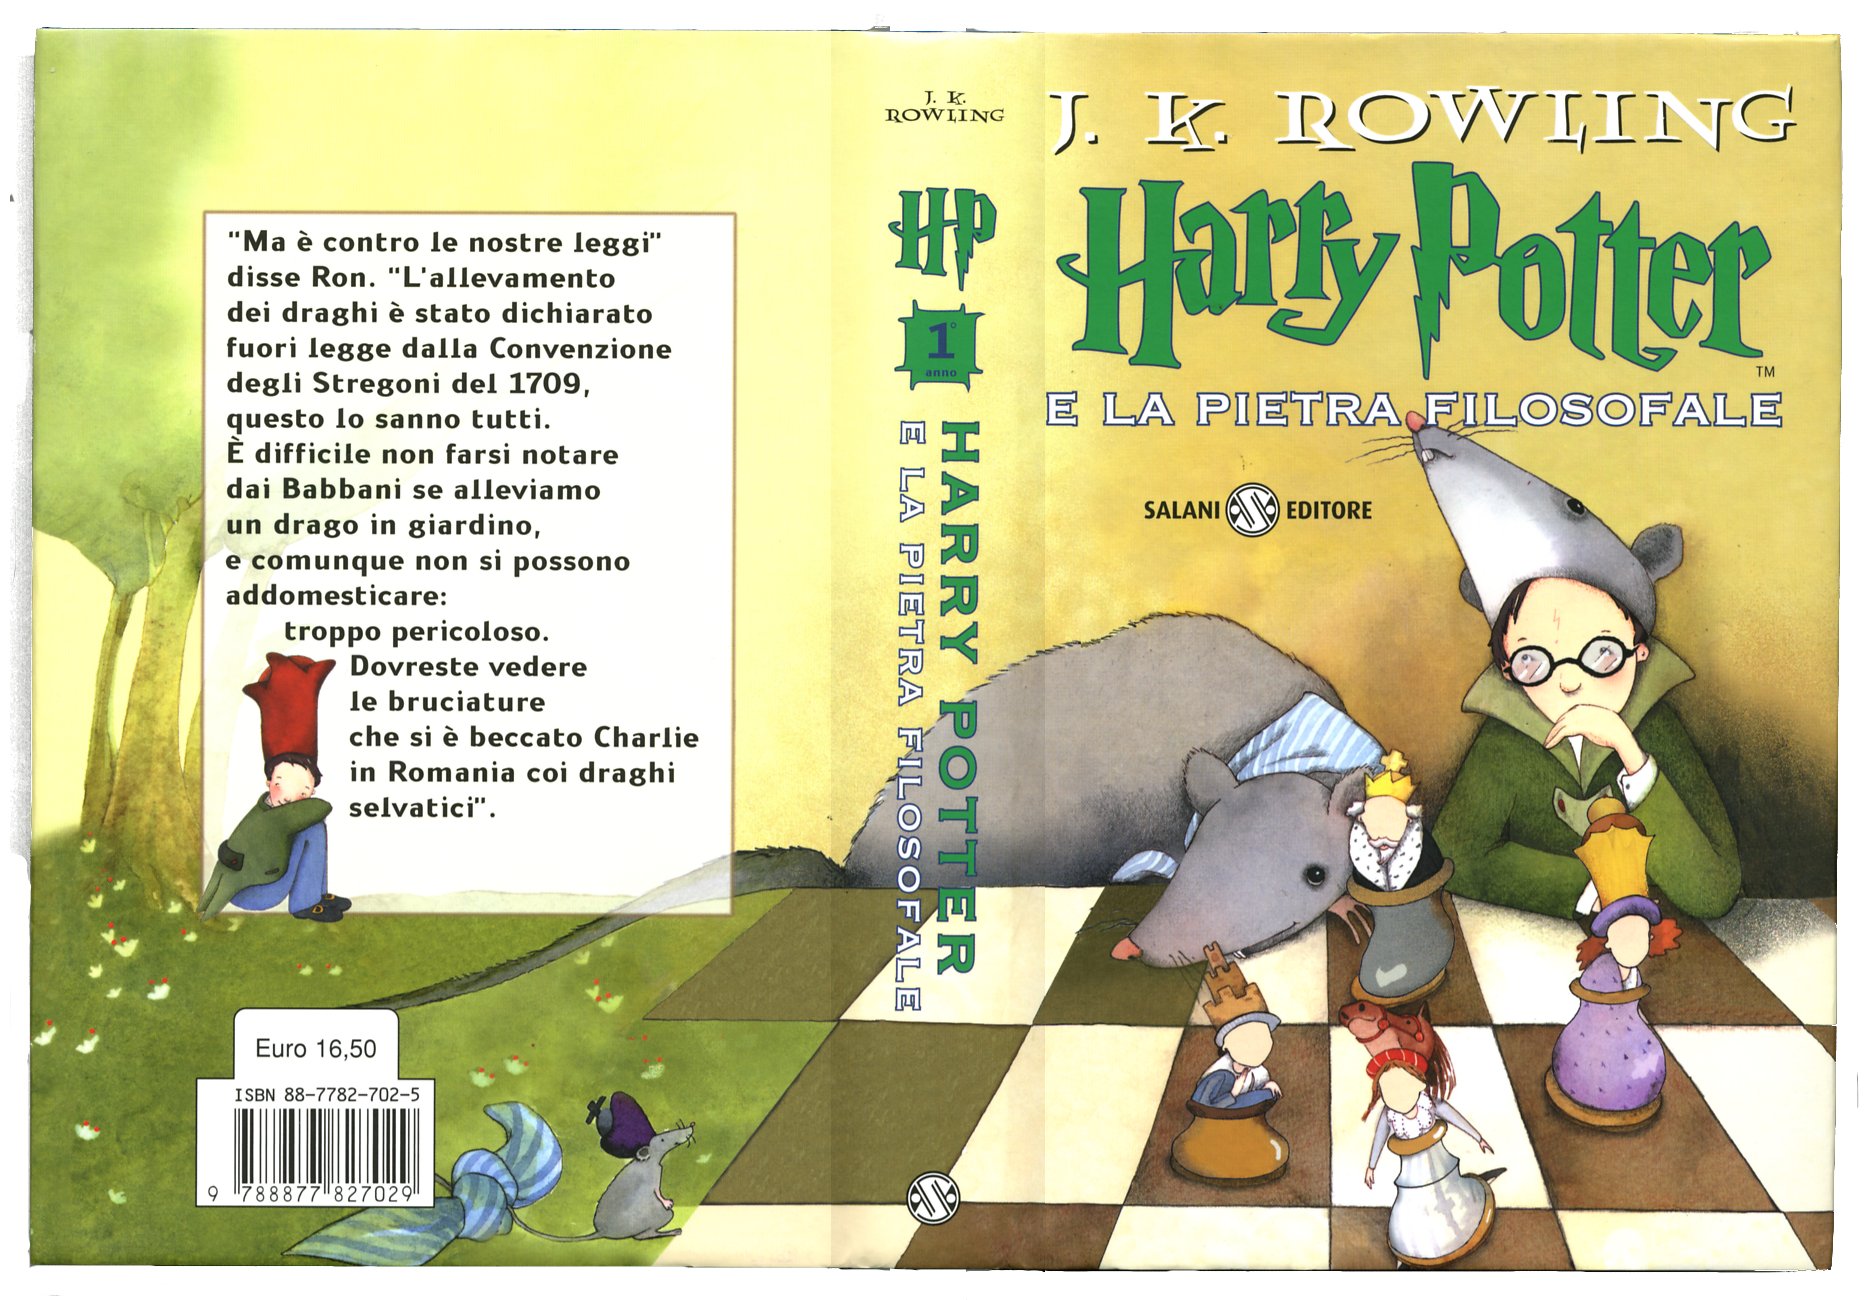 3 Harry Potter e la pietra filosofale movie free download